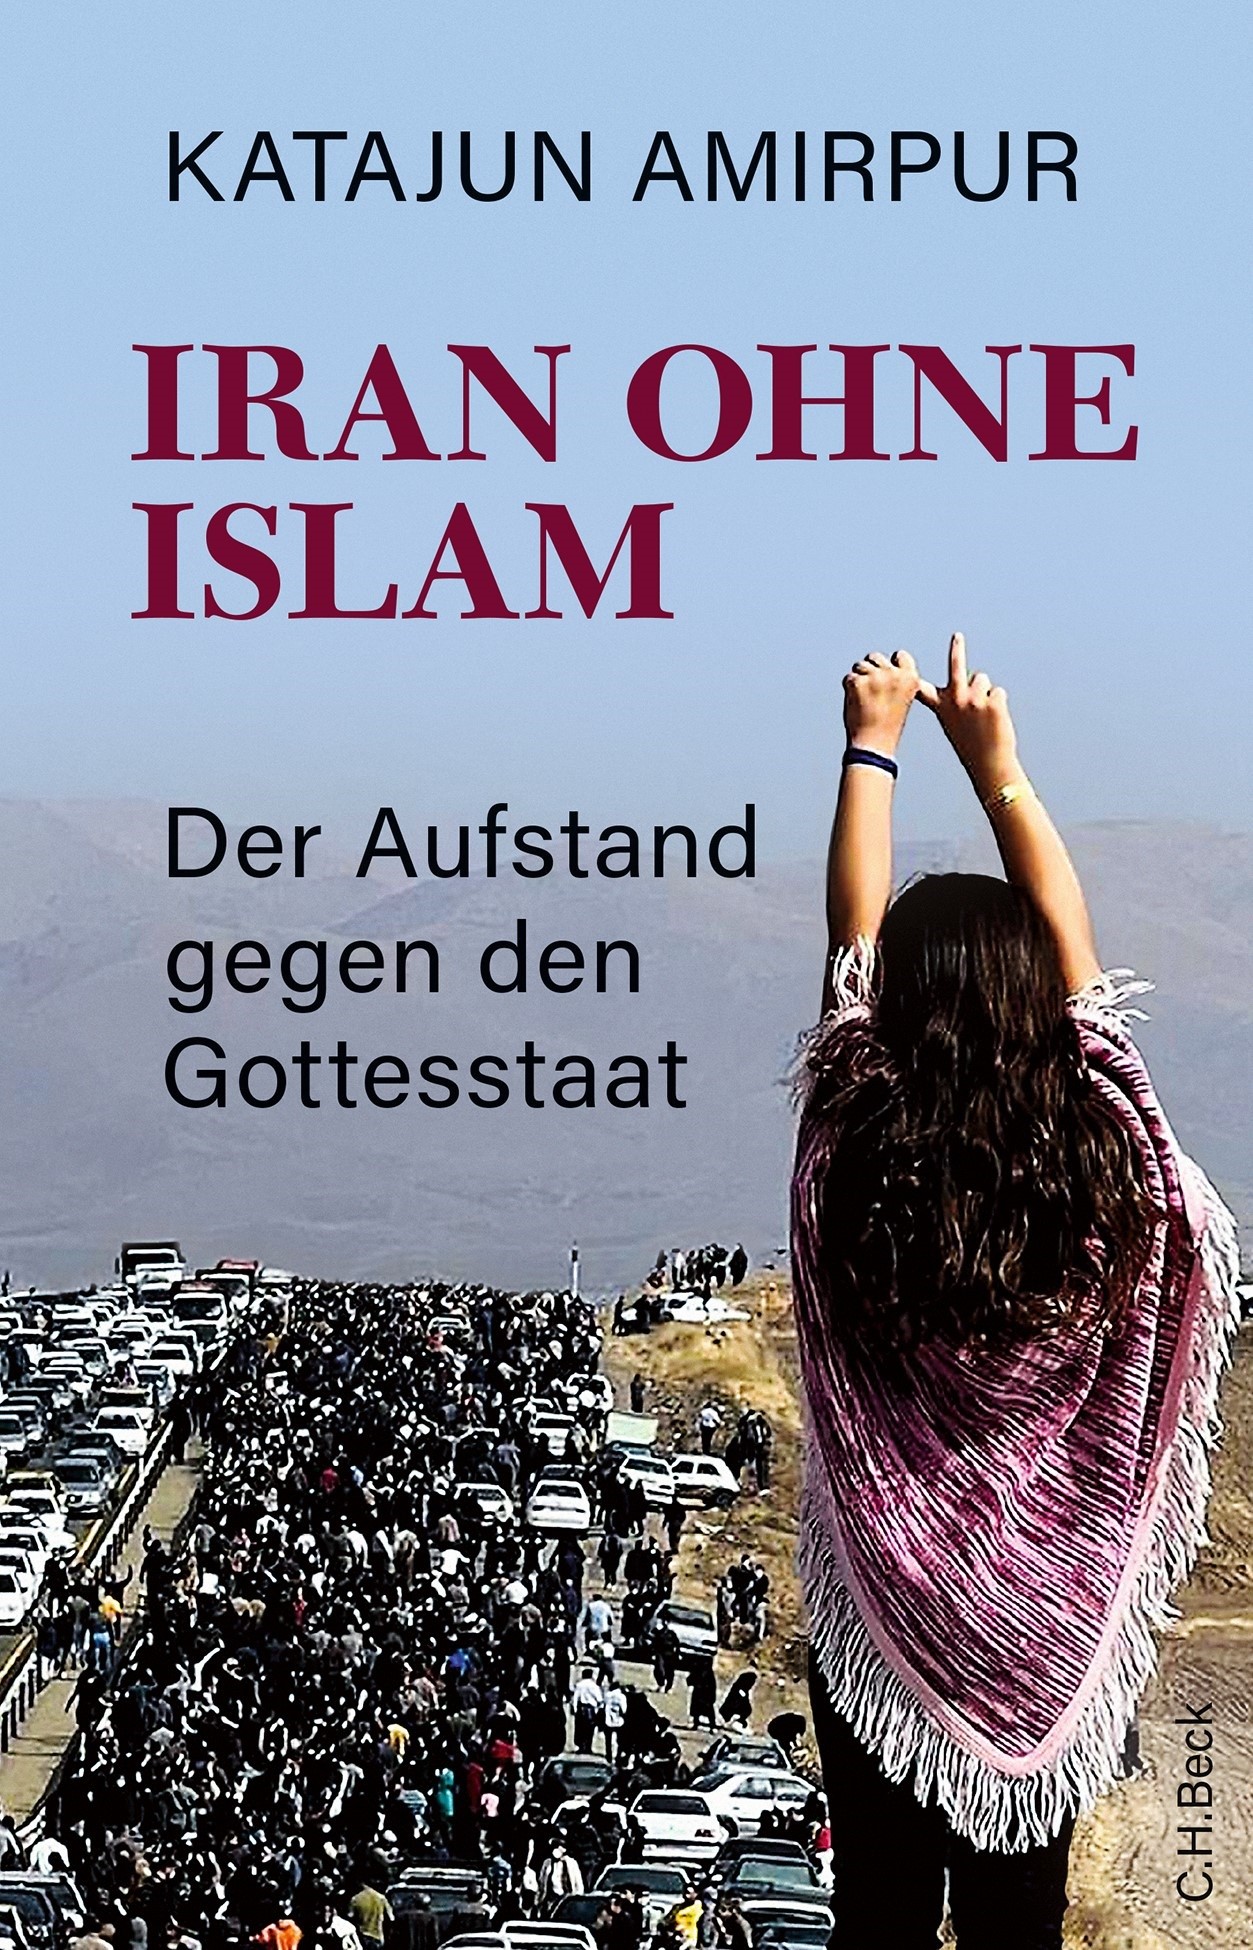 Cover of Katajun Amirpur's "Iran ohne Islam. Der Aufstand gegen den Gottesstaat", published in German by C.H. Beck (source: publisher)